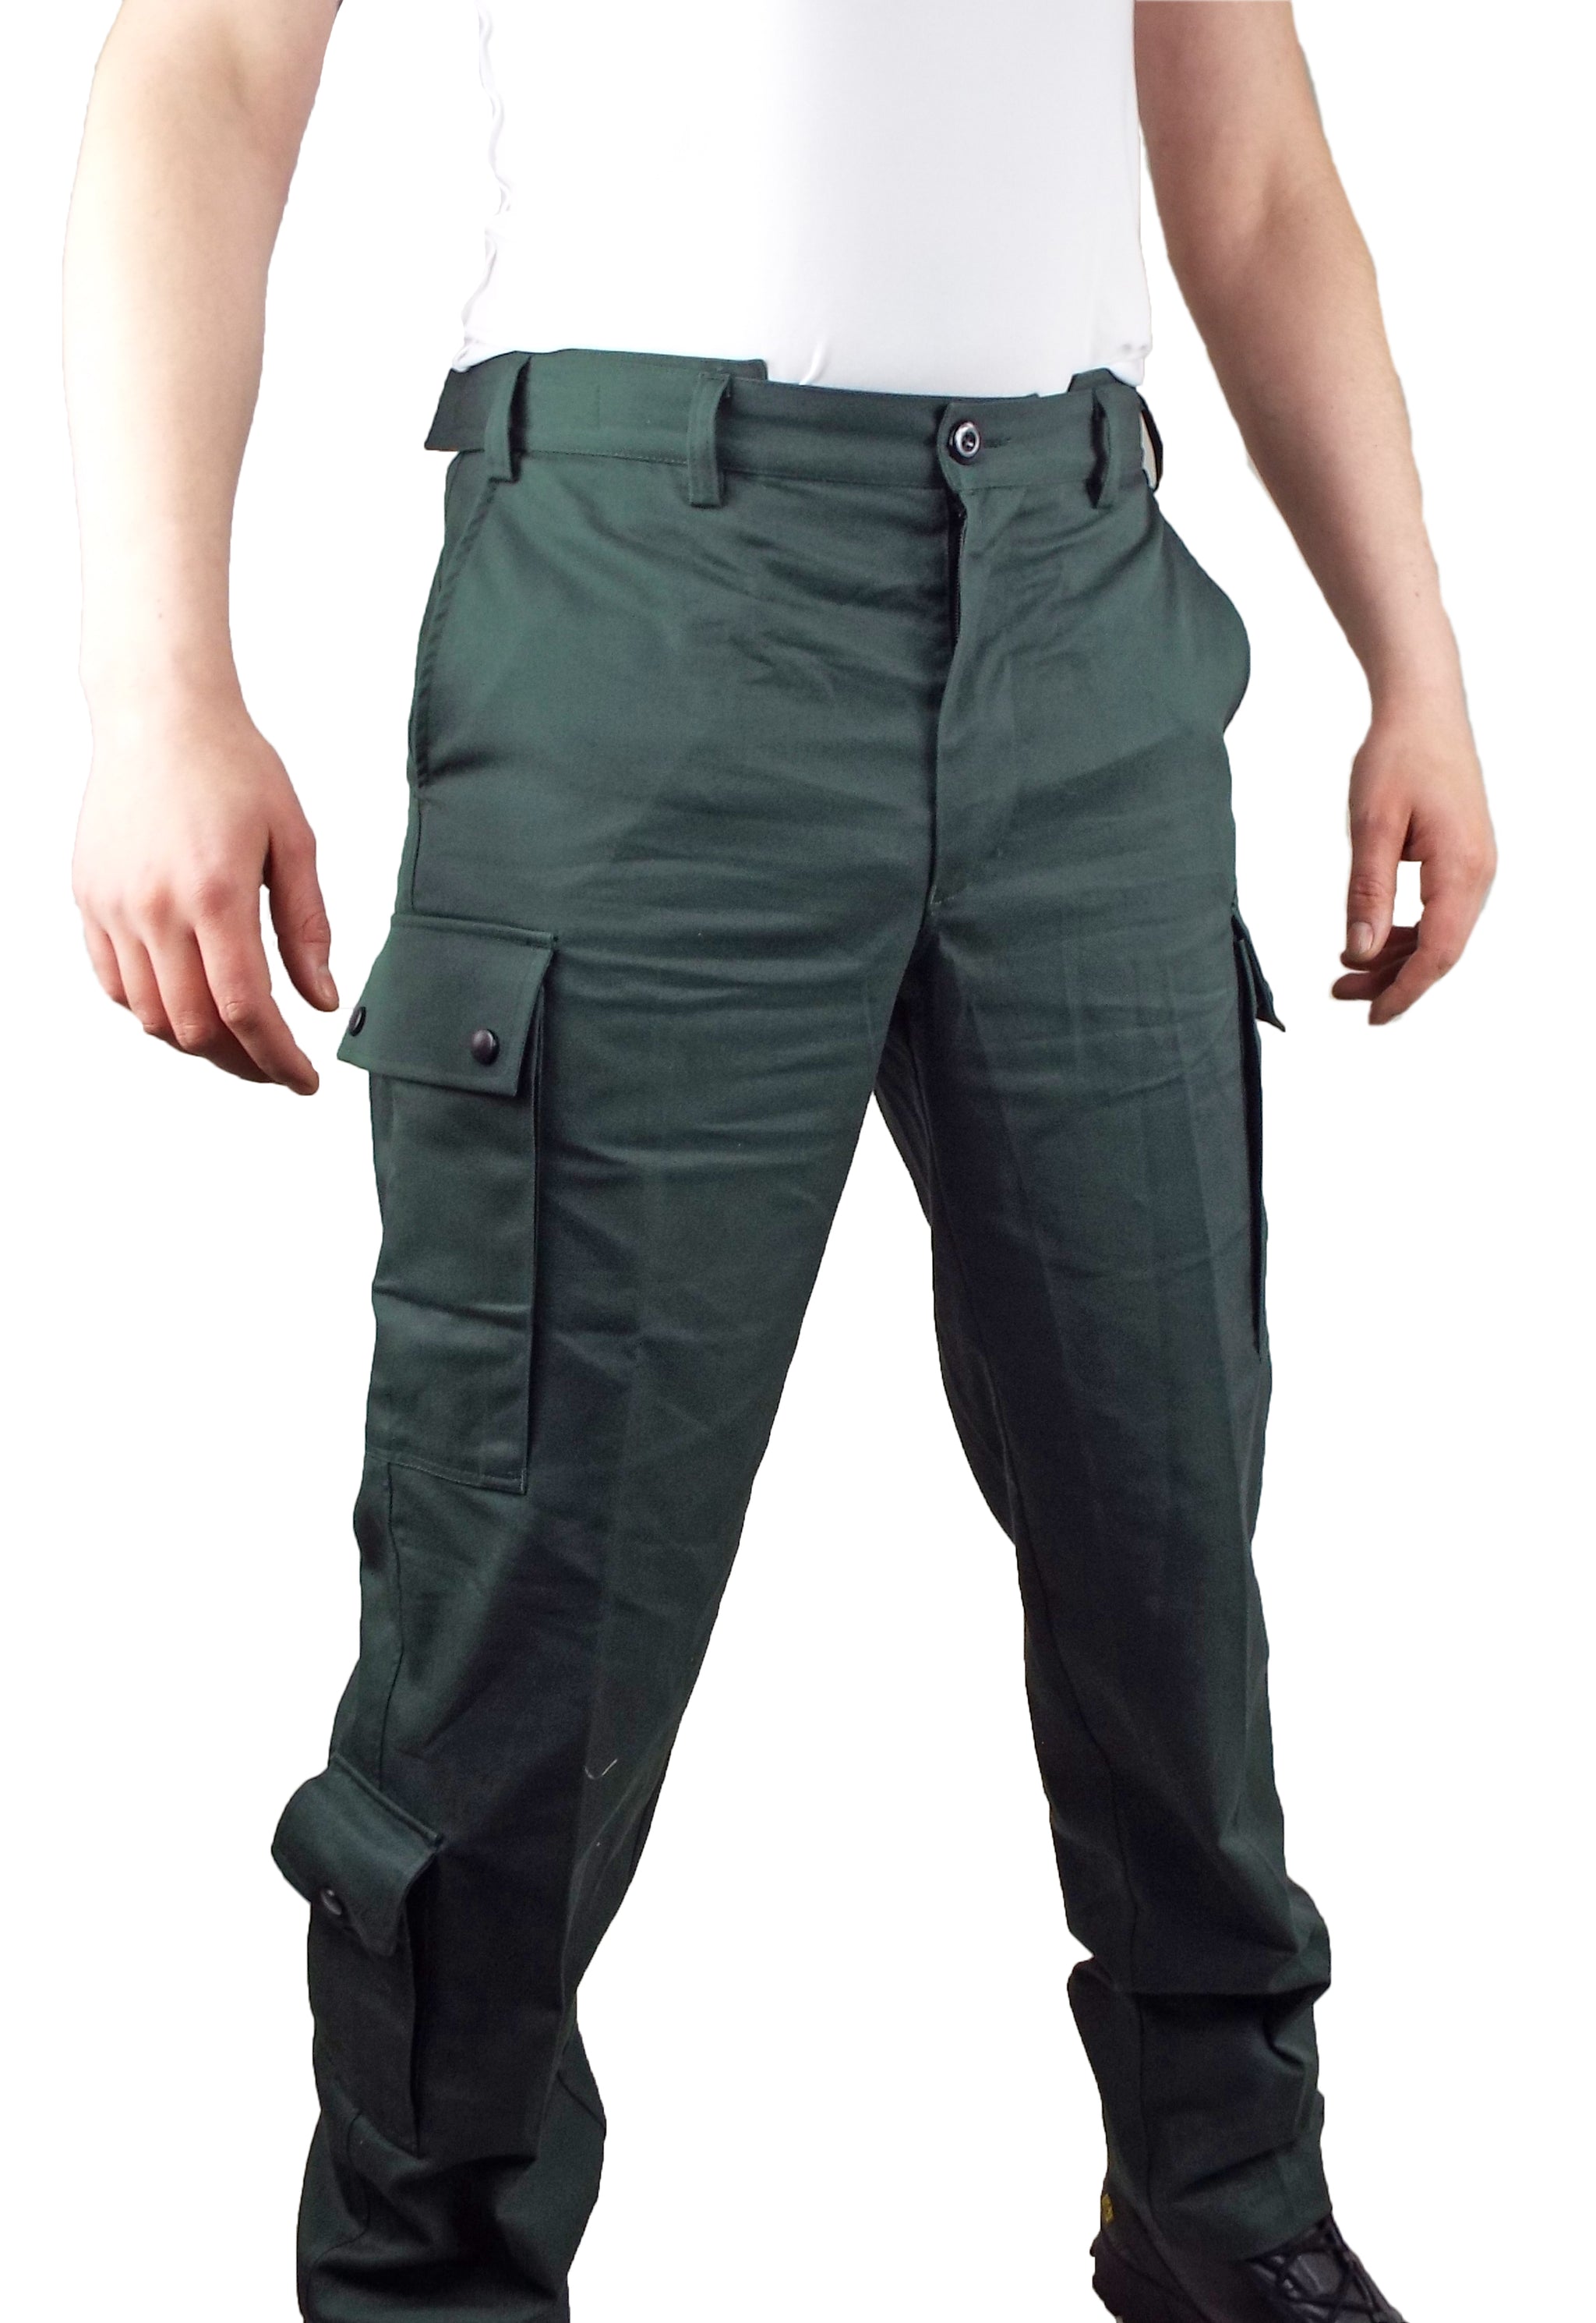 Solid 6 Pockets Cargo Pant With Black Strip On Pocket Slim and Regular fit